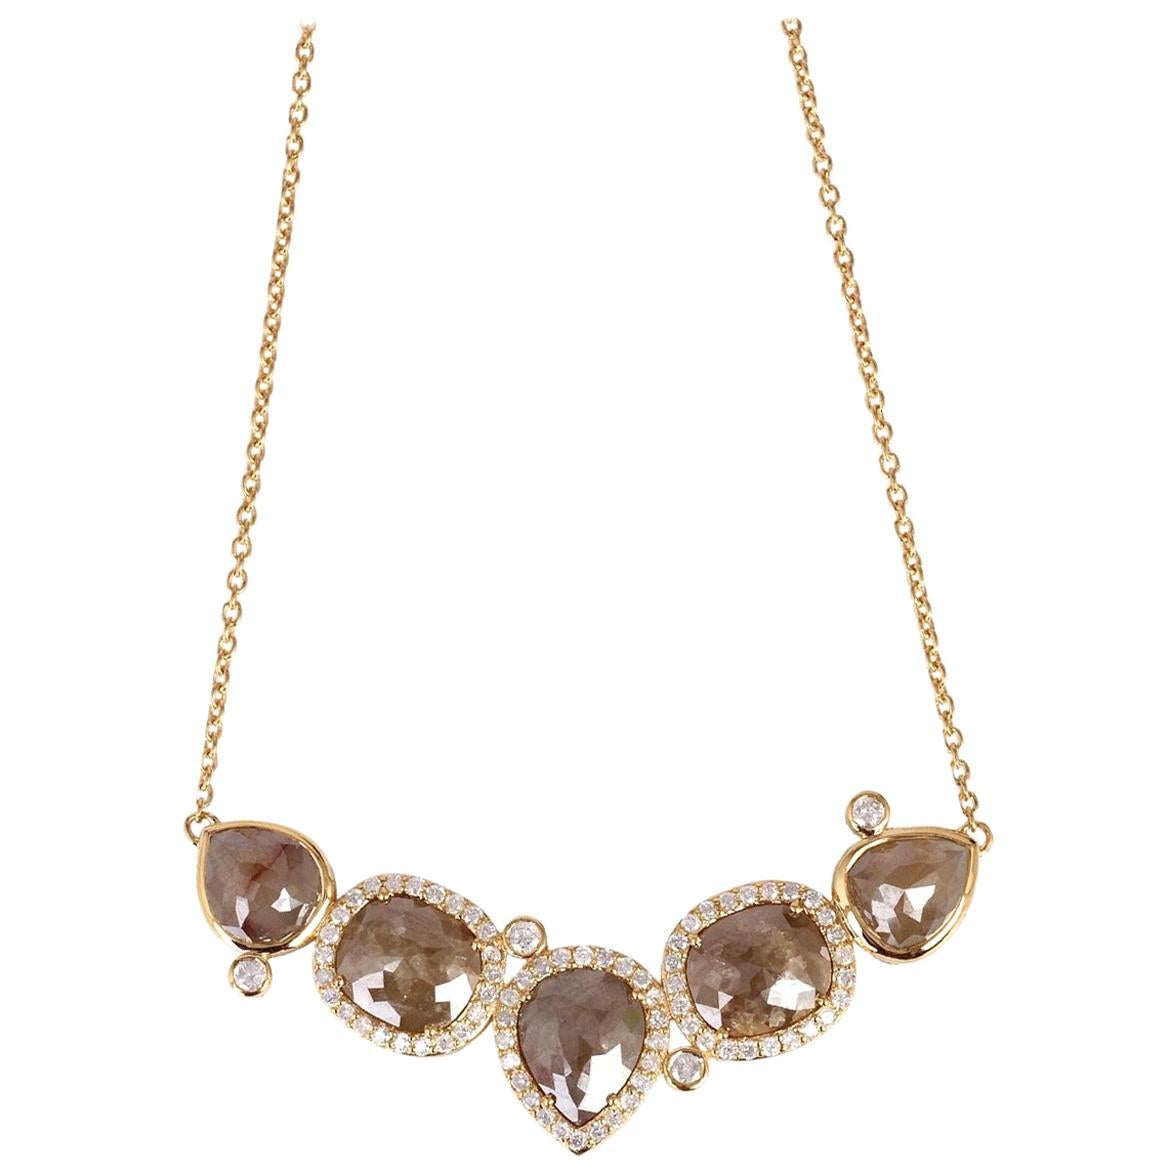 9.69 Carat Fancy Diamond Pendant 18 Karat Gold Necklace For Sale